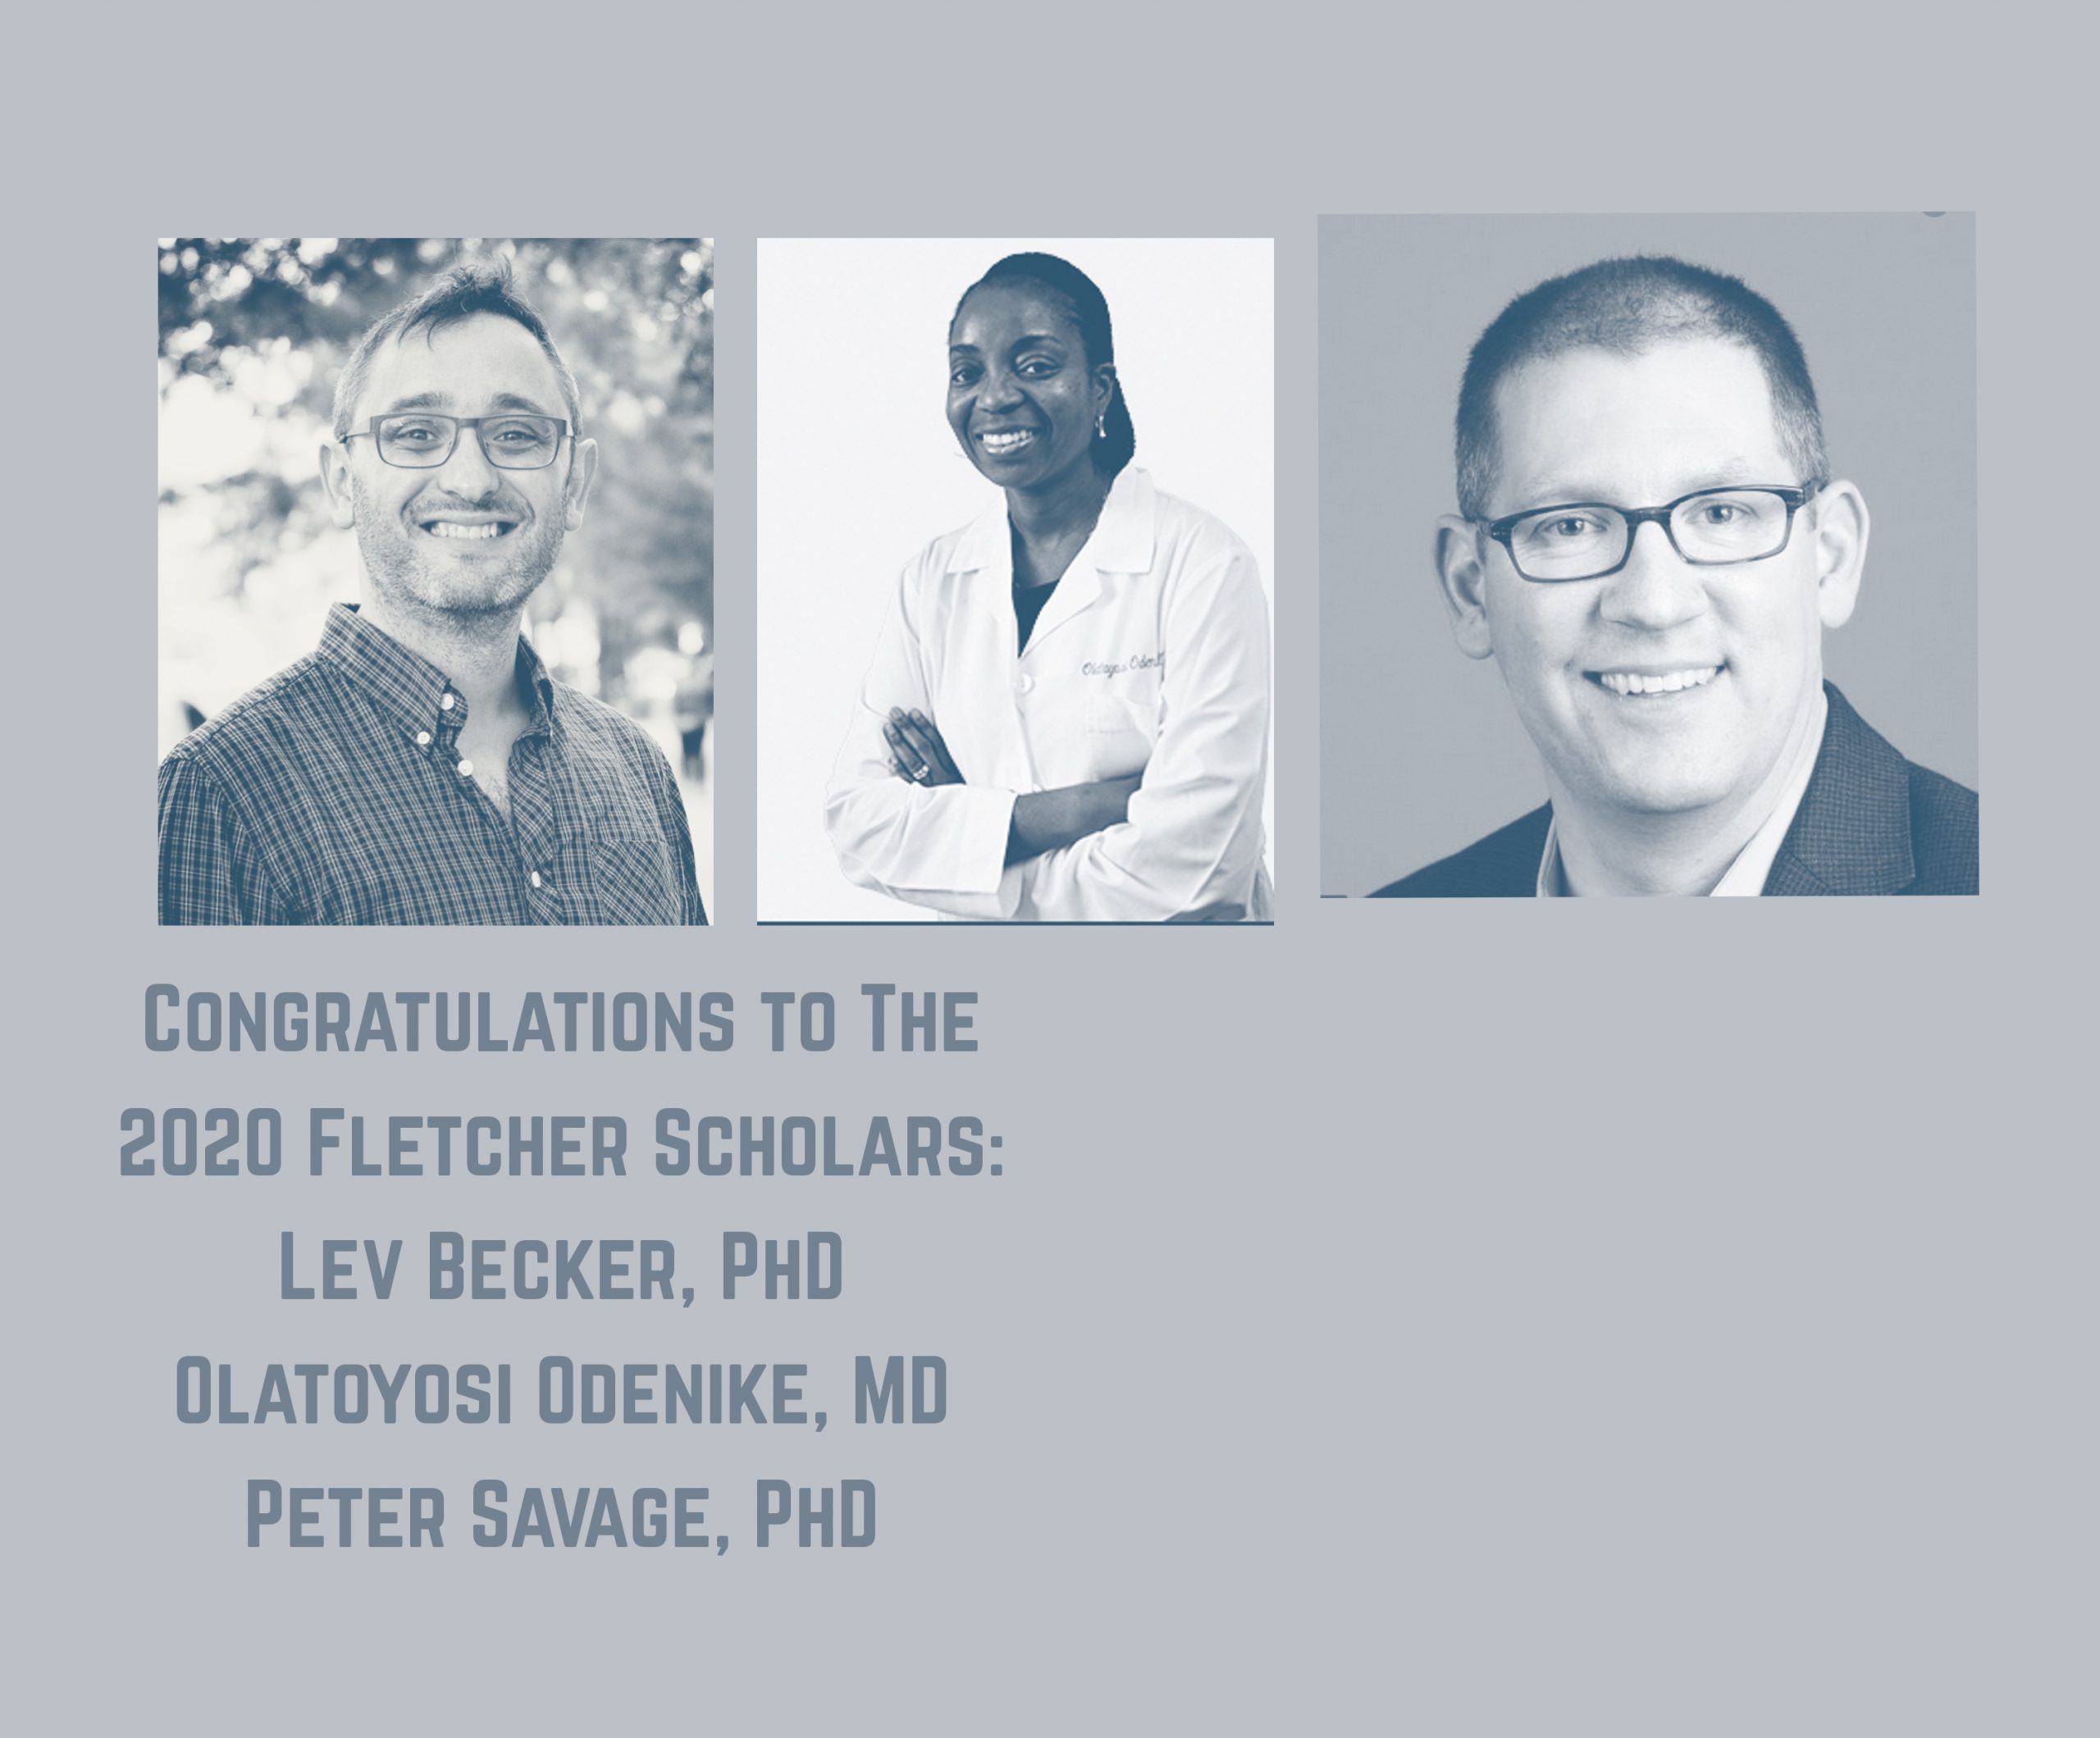 2020 CRF Fletcher Scholars Announced